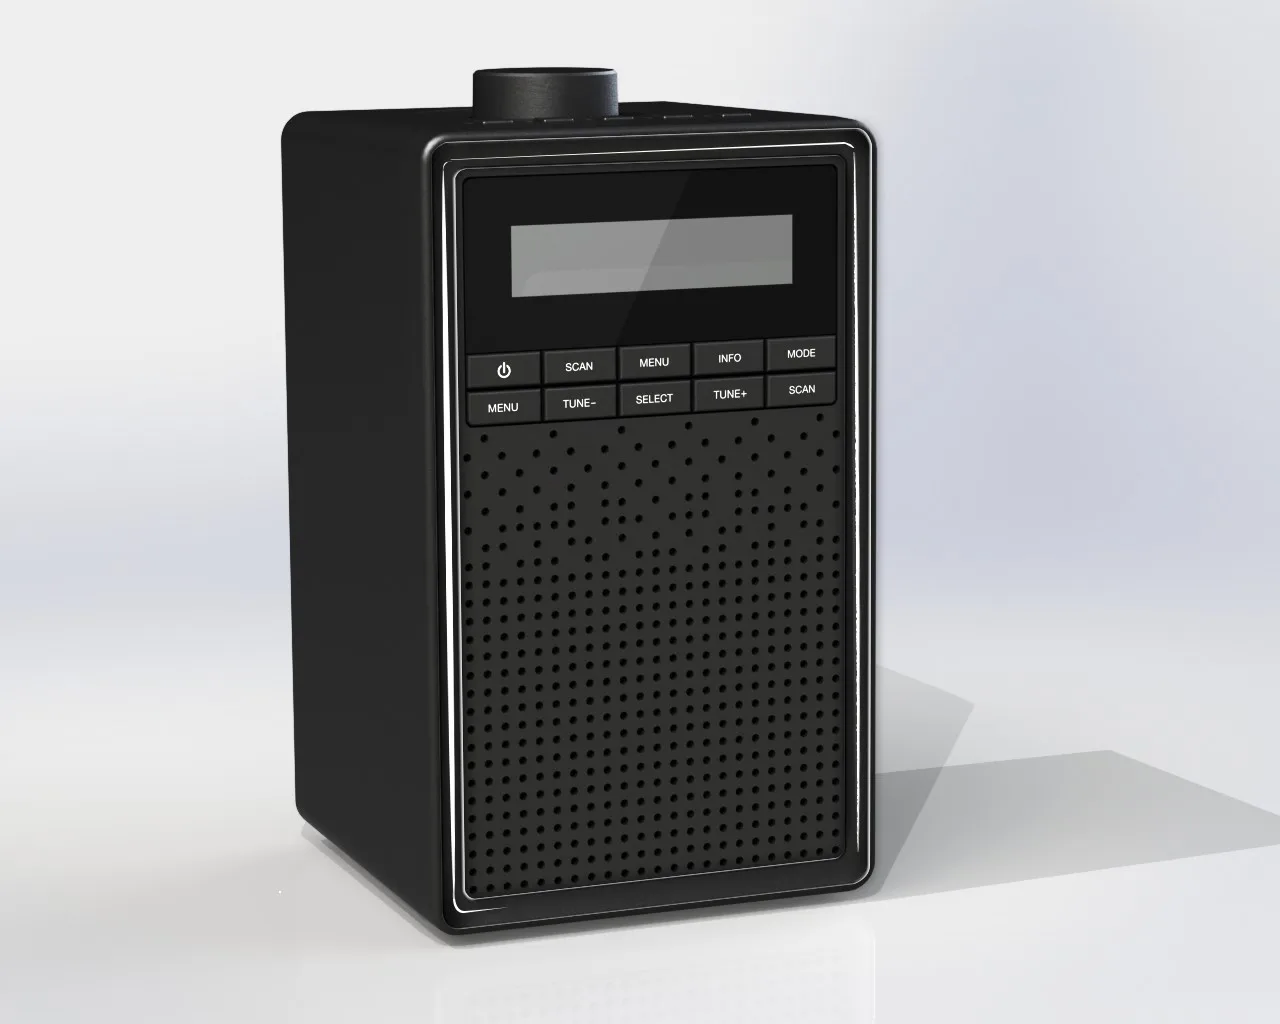 Cabinet Stereo Online Station Stream Internet Dab Radio Receiver